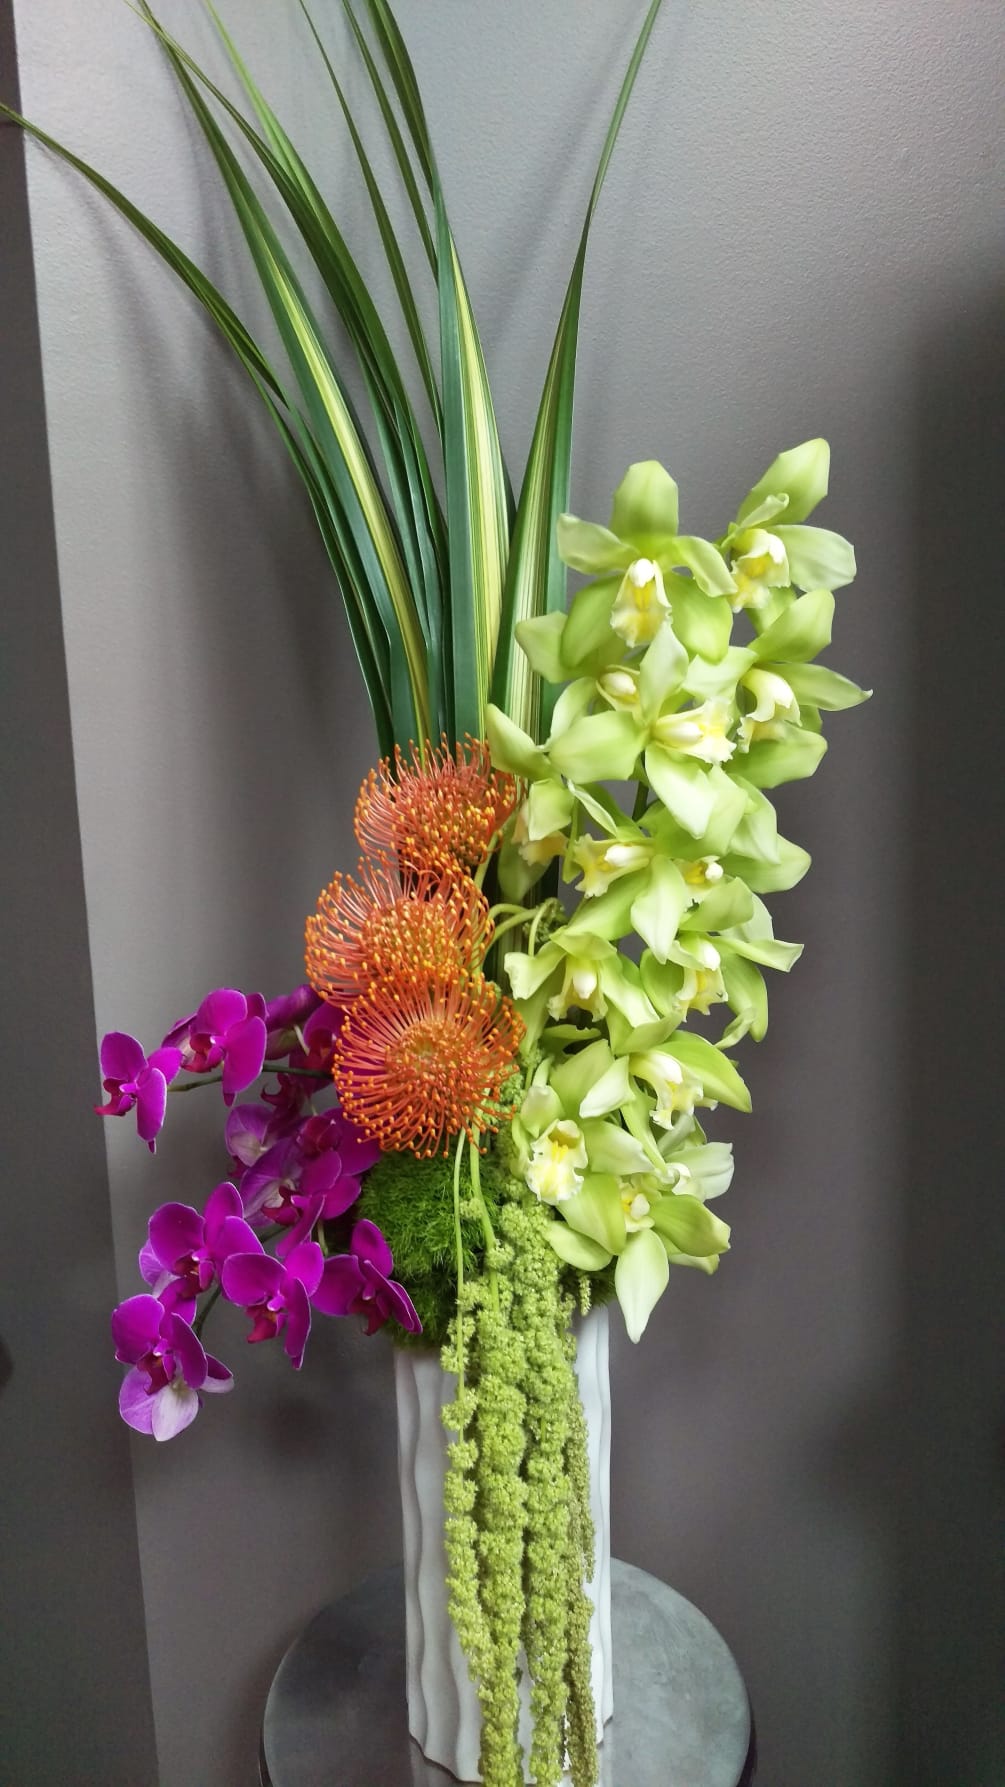 Pin cushion protea, trick, hanging amaranthus, cymbidium &amp; phal orchids in a